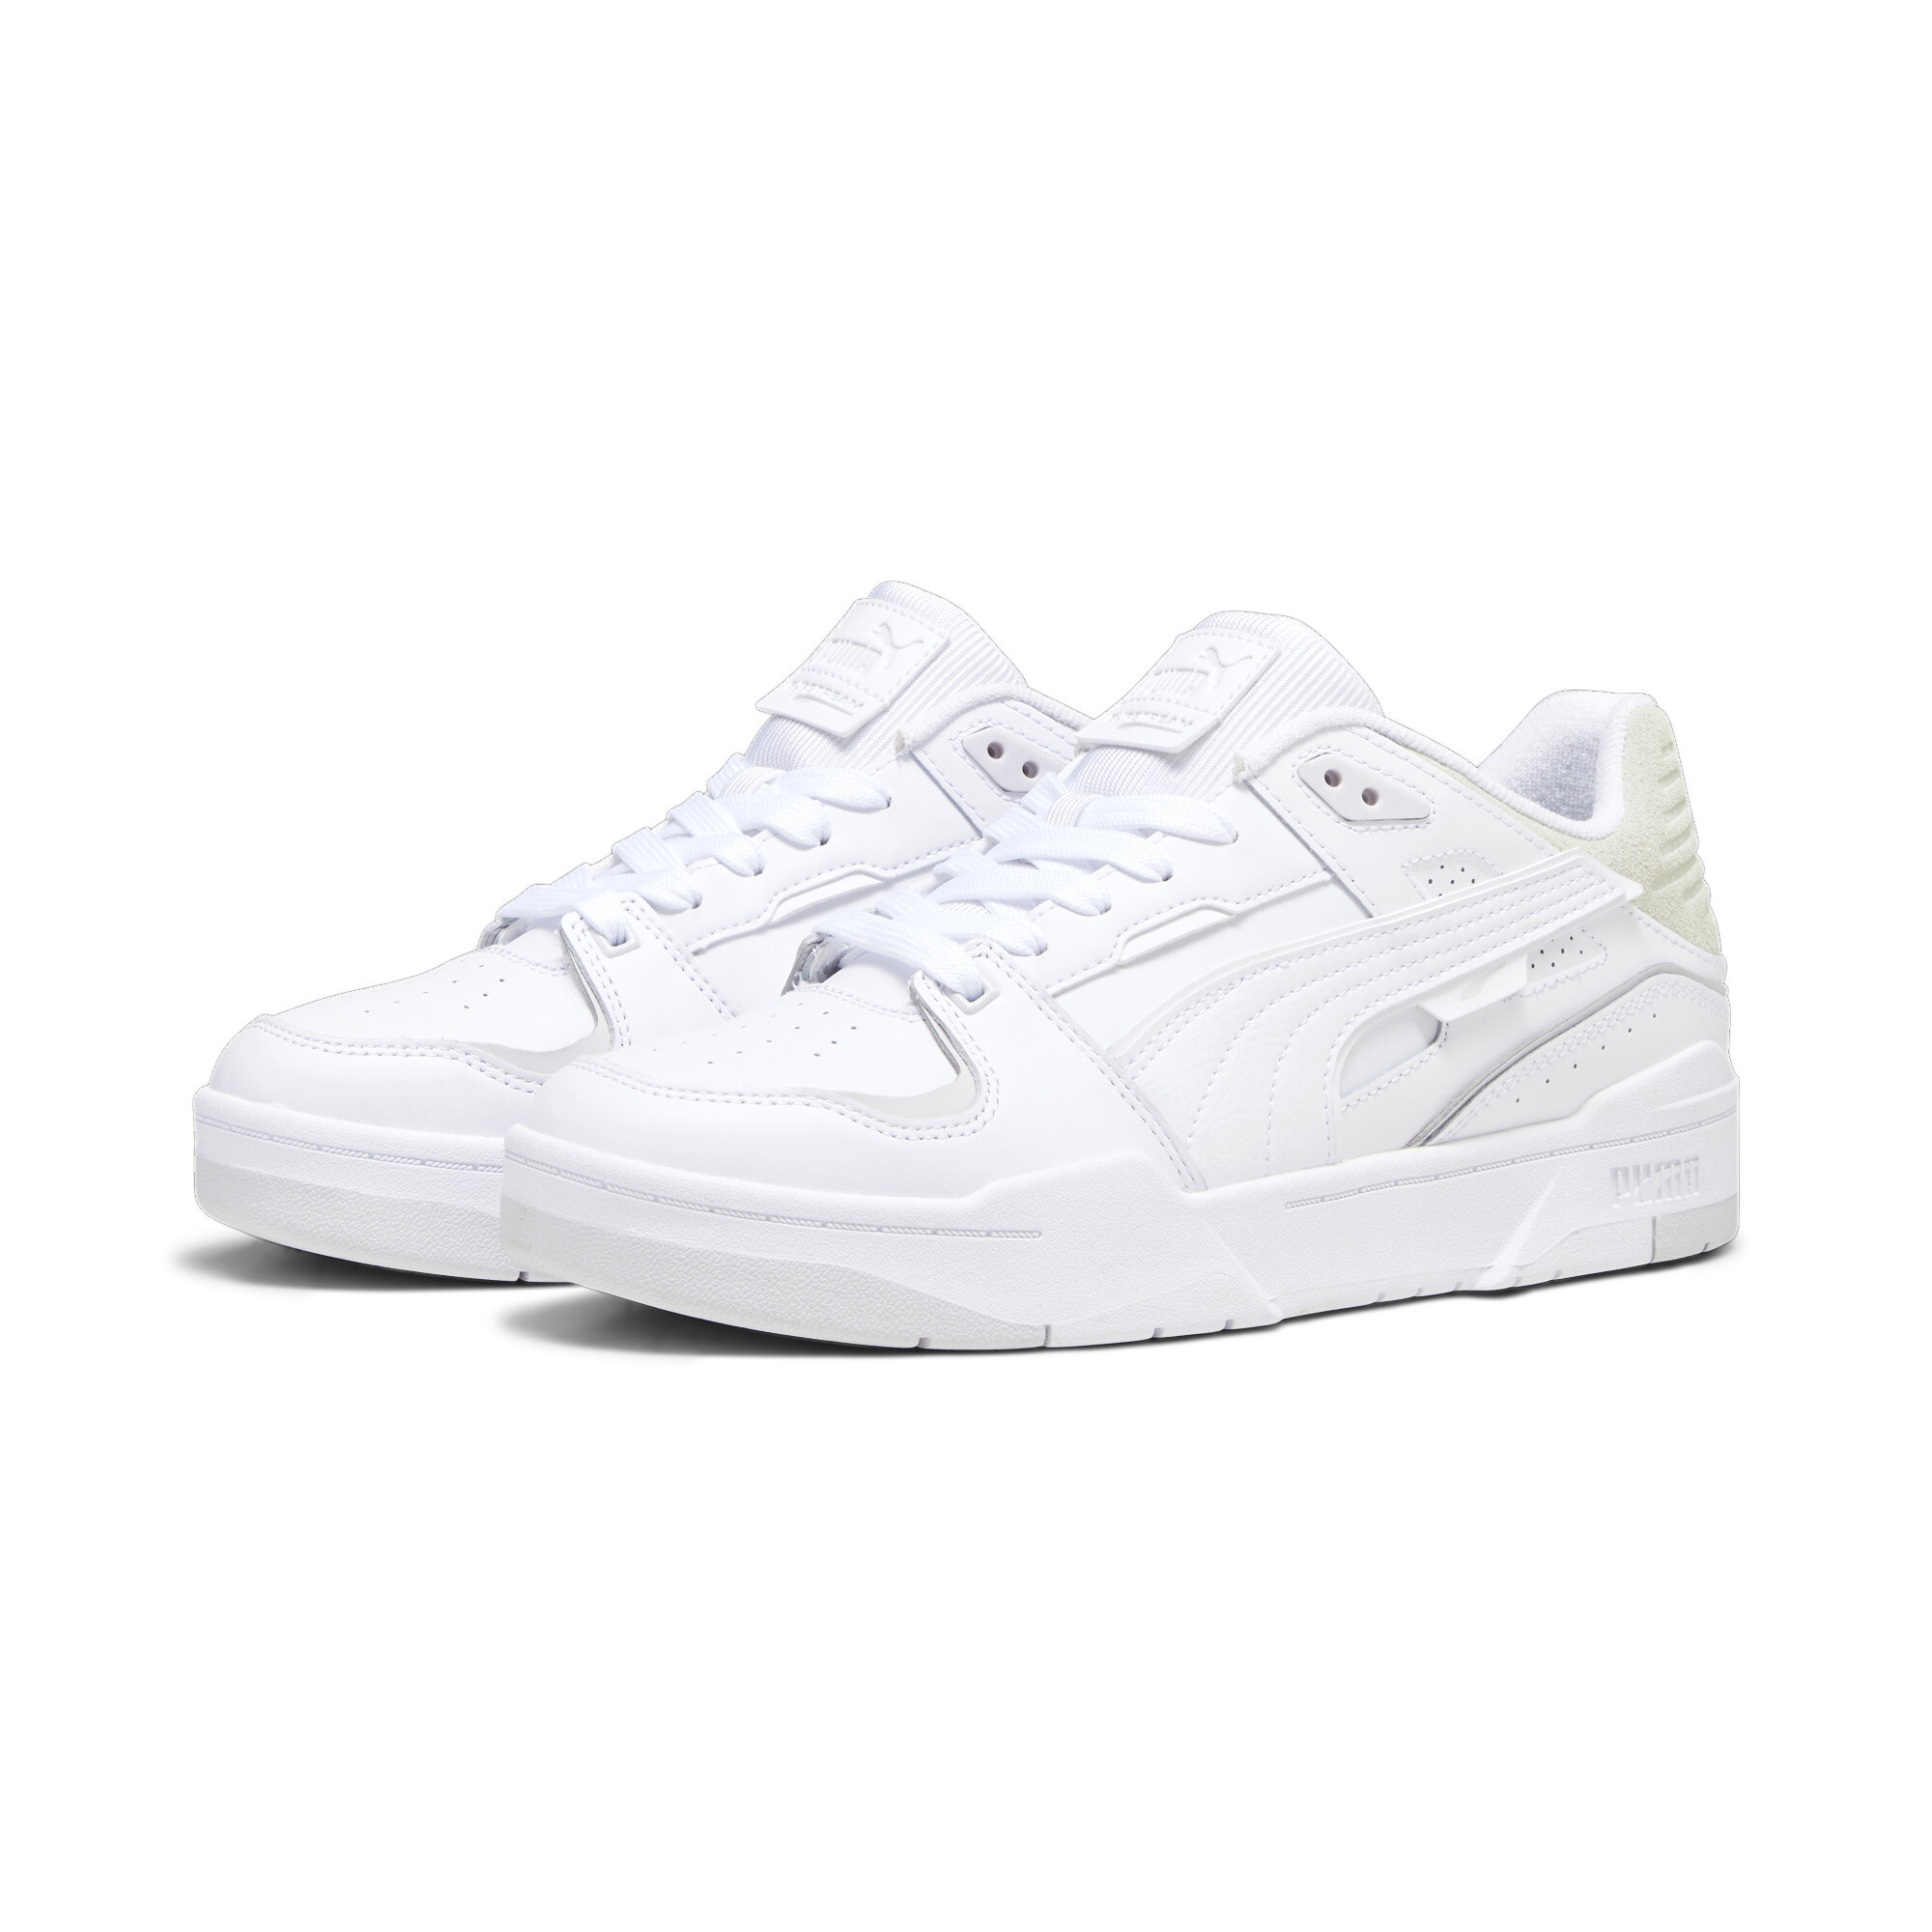 Men's PUMA Slipstream Bball Sneakers In White, Size EU 42.5